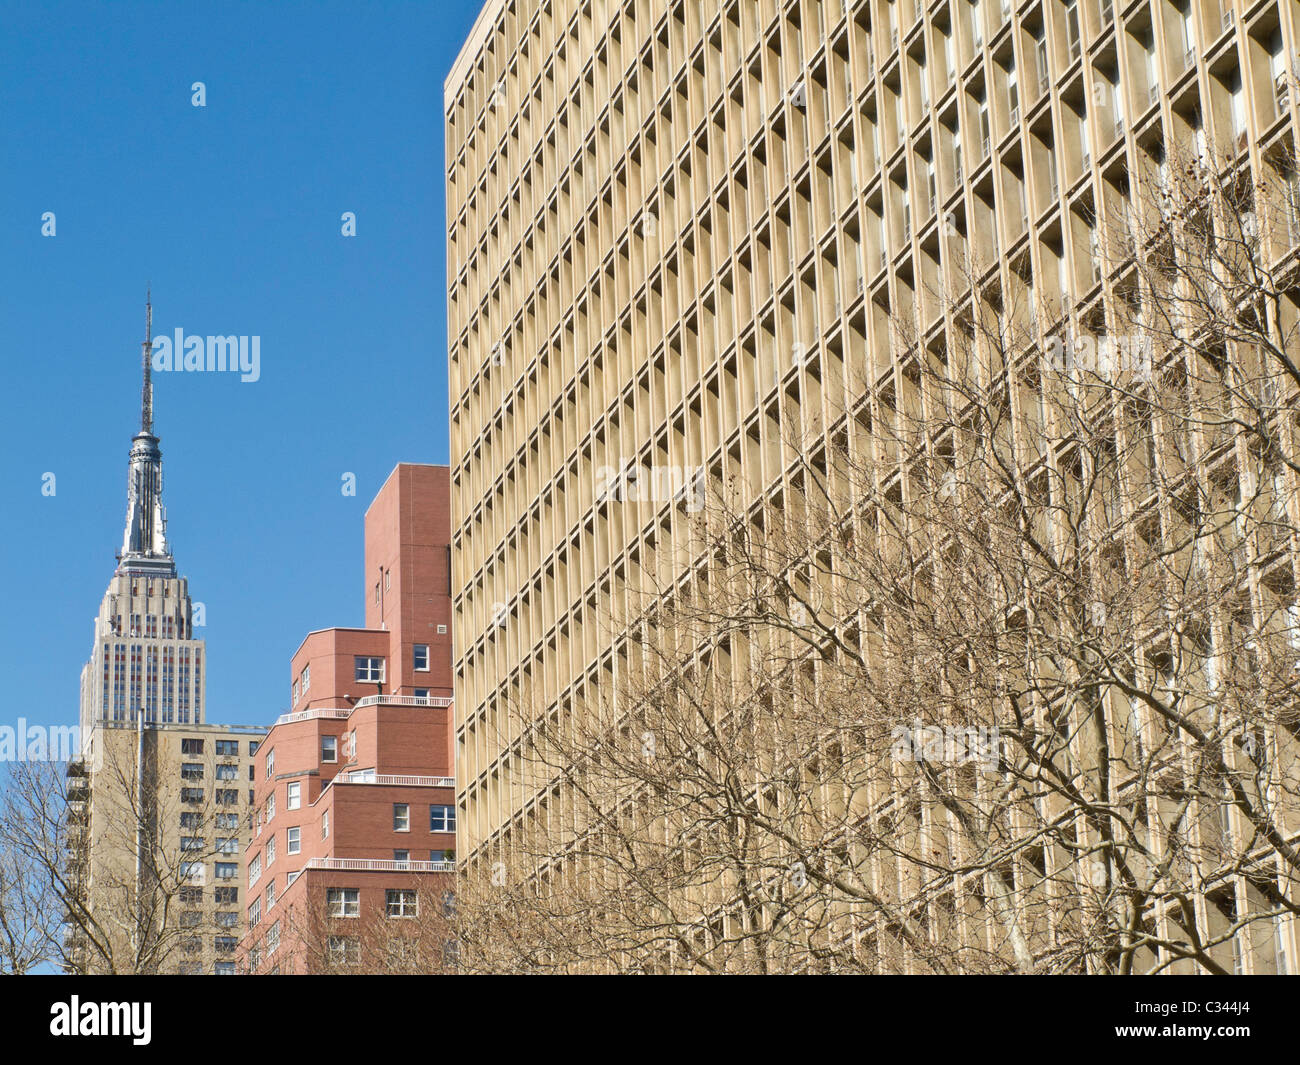 Kips Bay Towers Condominium Complex was designed by architect I.M. Pei, New York City, USA Stock Photo